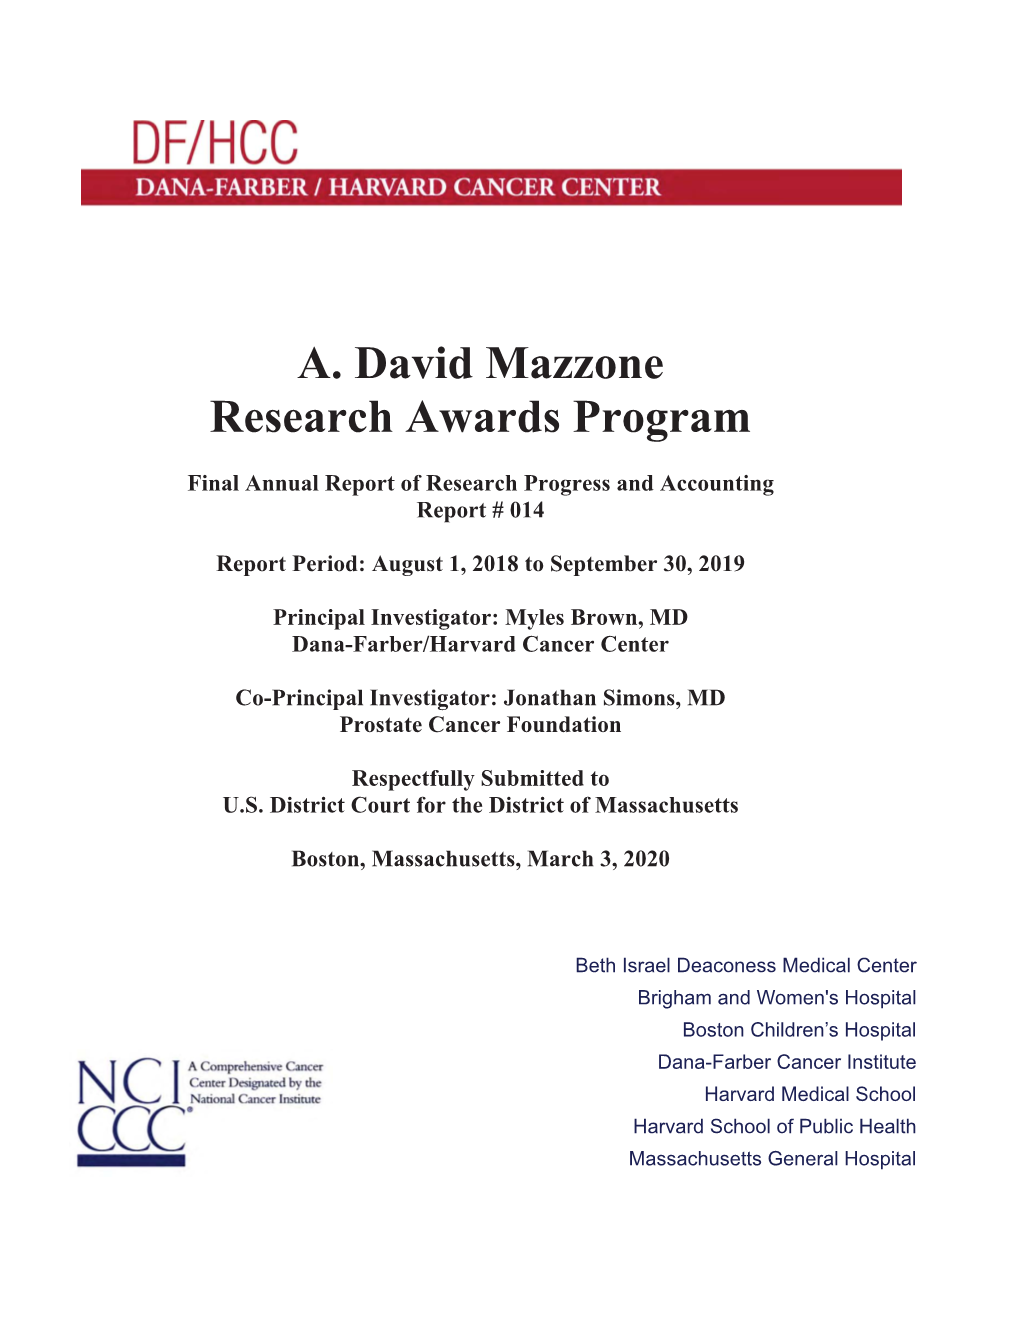 Final Report: A. David Mazzone Research Awards Program